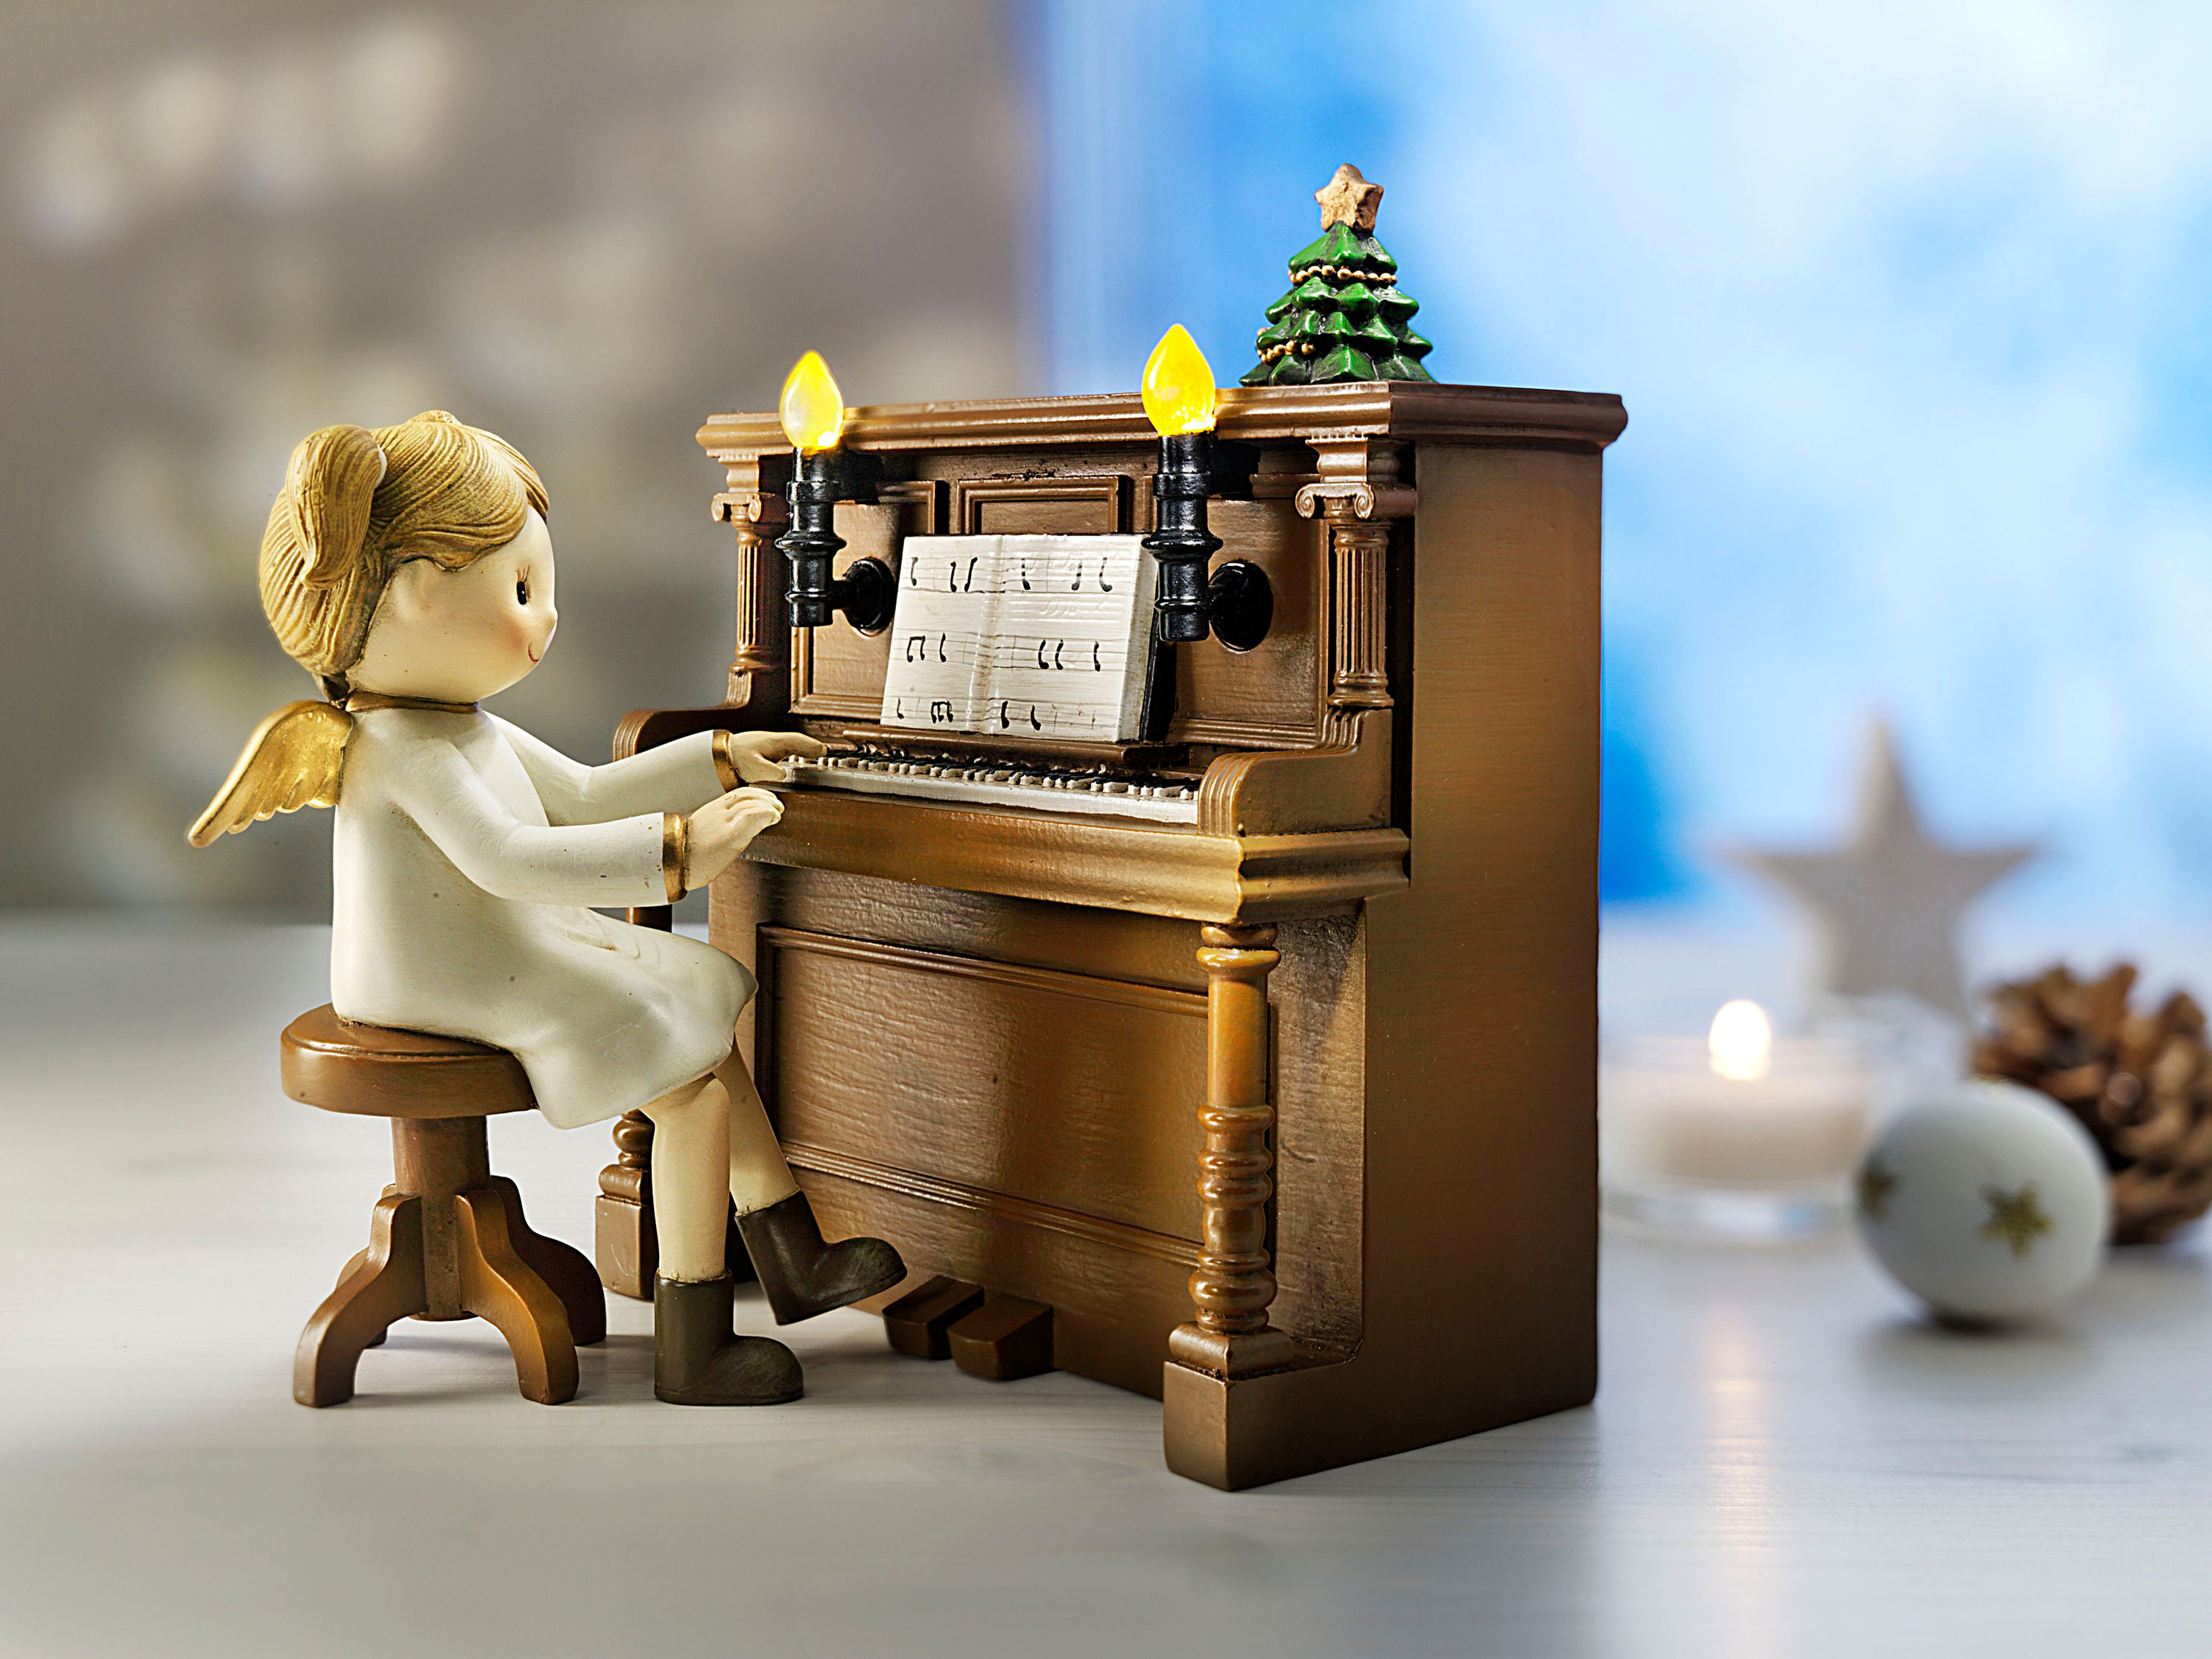 LED-Spieluhr Engel am Piano jetzt bei Weltbild.de bestellen